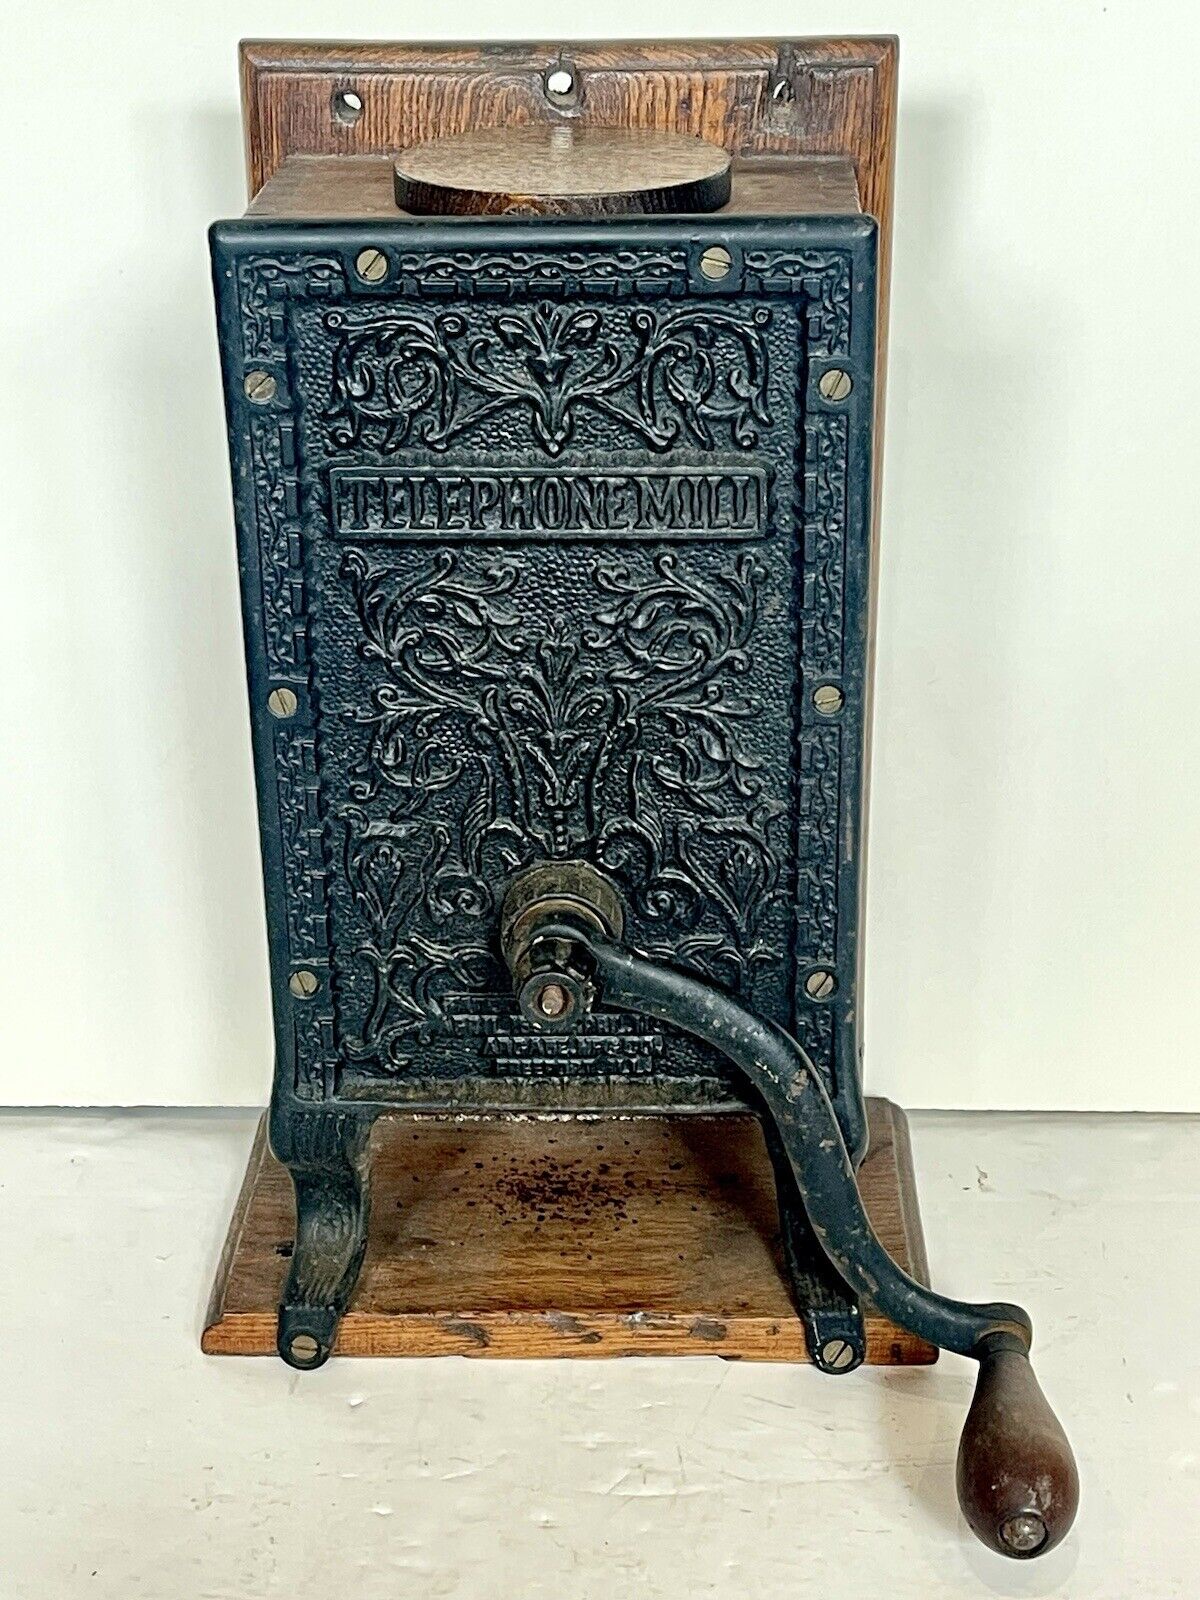 Antique ARCADE TELEPHONE COFFEE MILL GRINDER Original Working Condition 1890’s